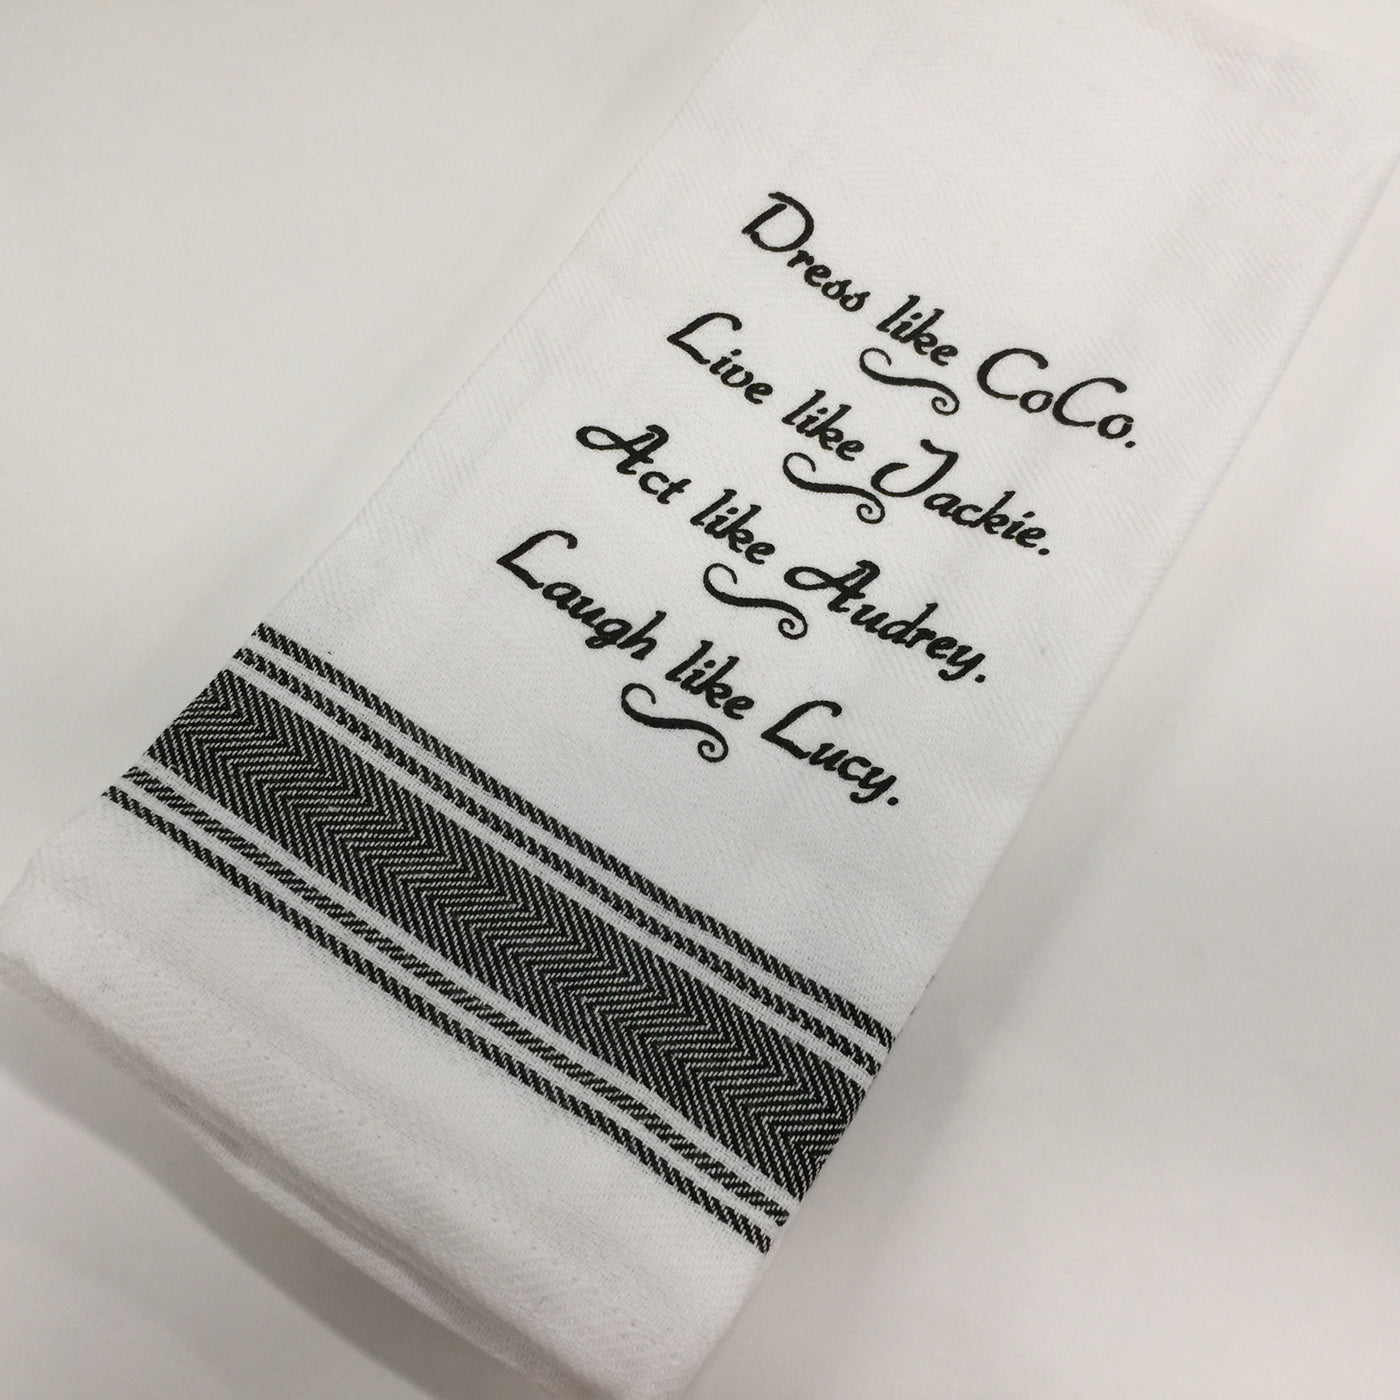 Dish Towel - "Dress like COCO."